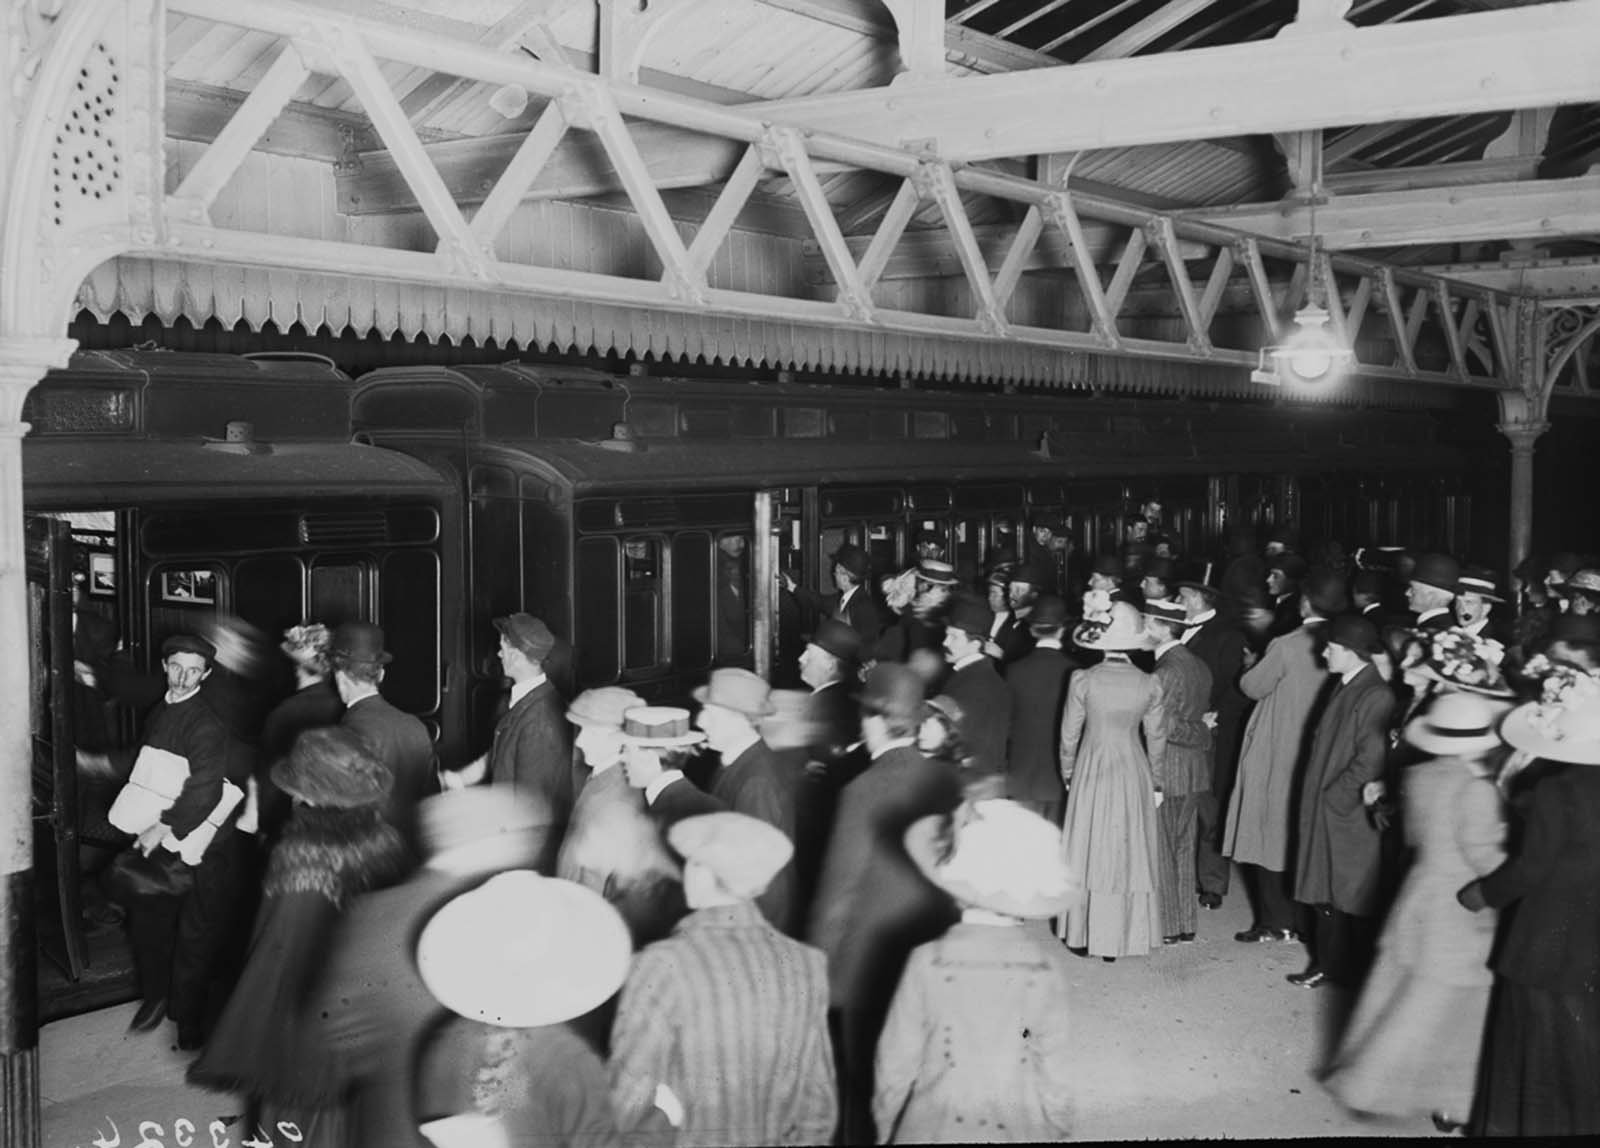 Relatives wait on a railway platform as survivors of the Titanic arrive at Southampton.